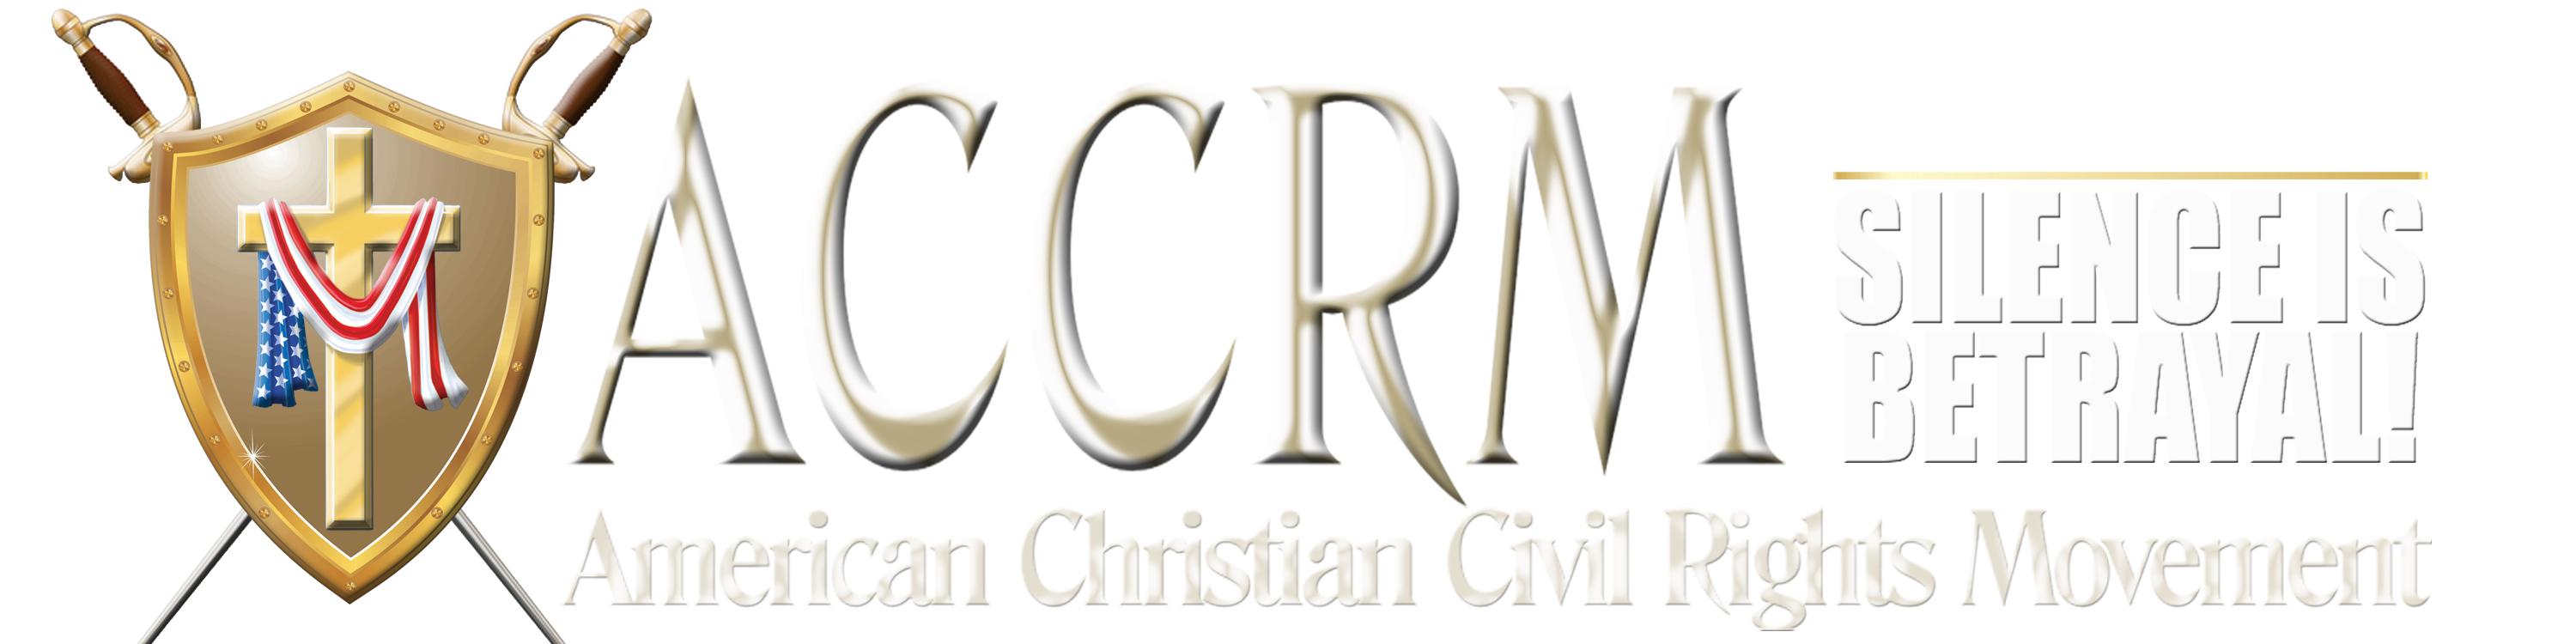 American Christian Civil Rights Movement